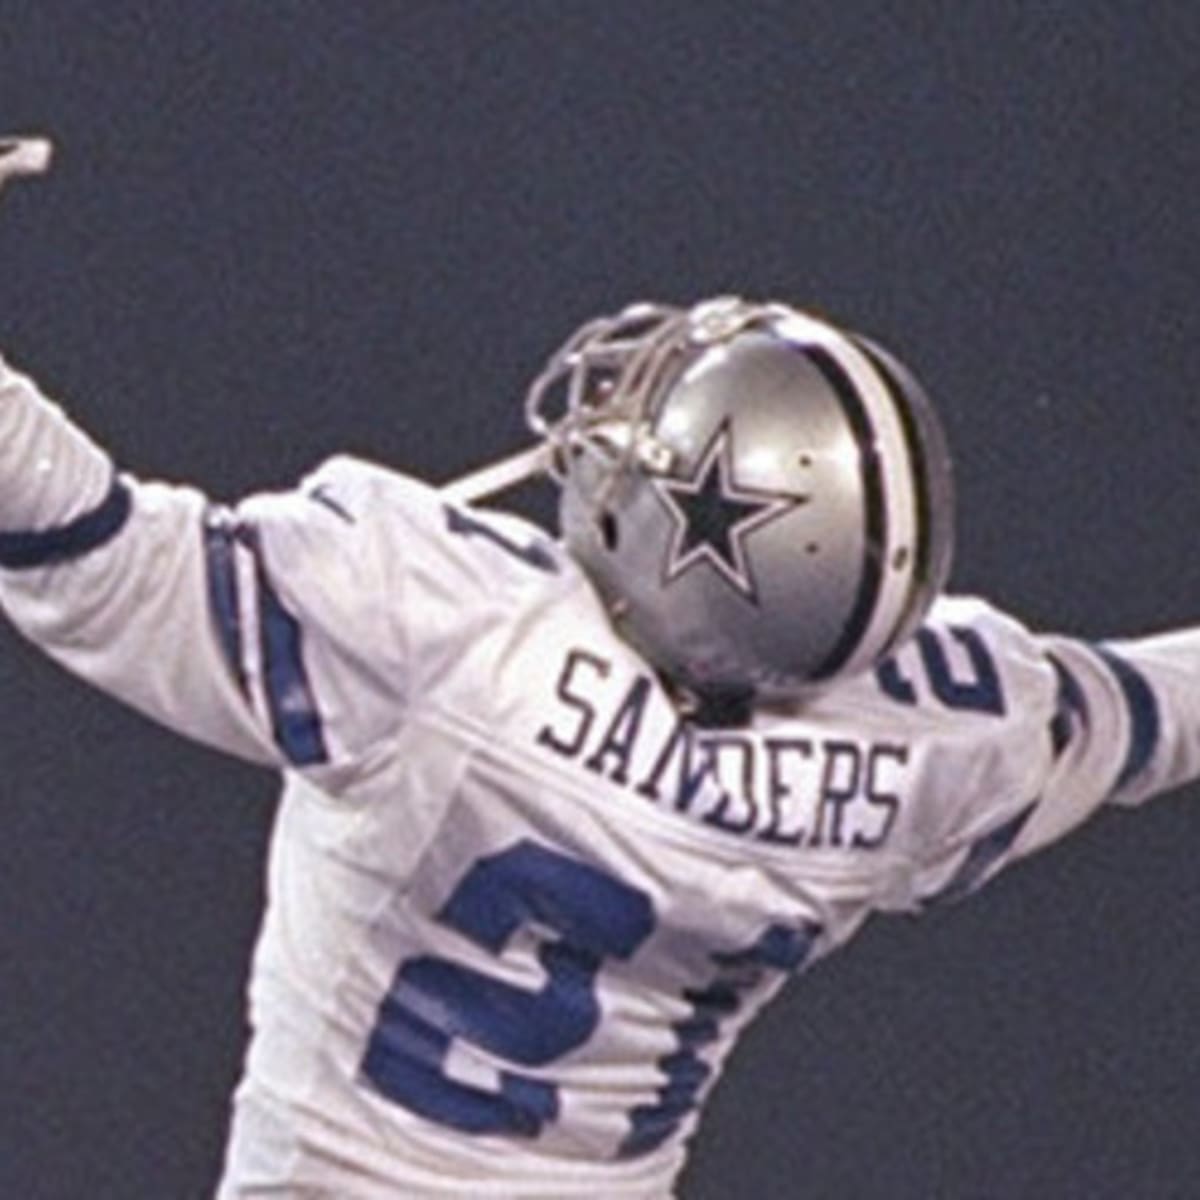 Cornerback Deion Sanders of the Dallas Cowboys prays while